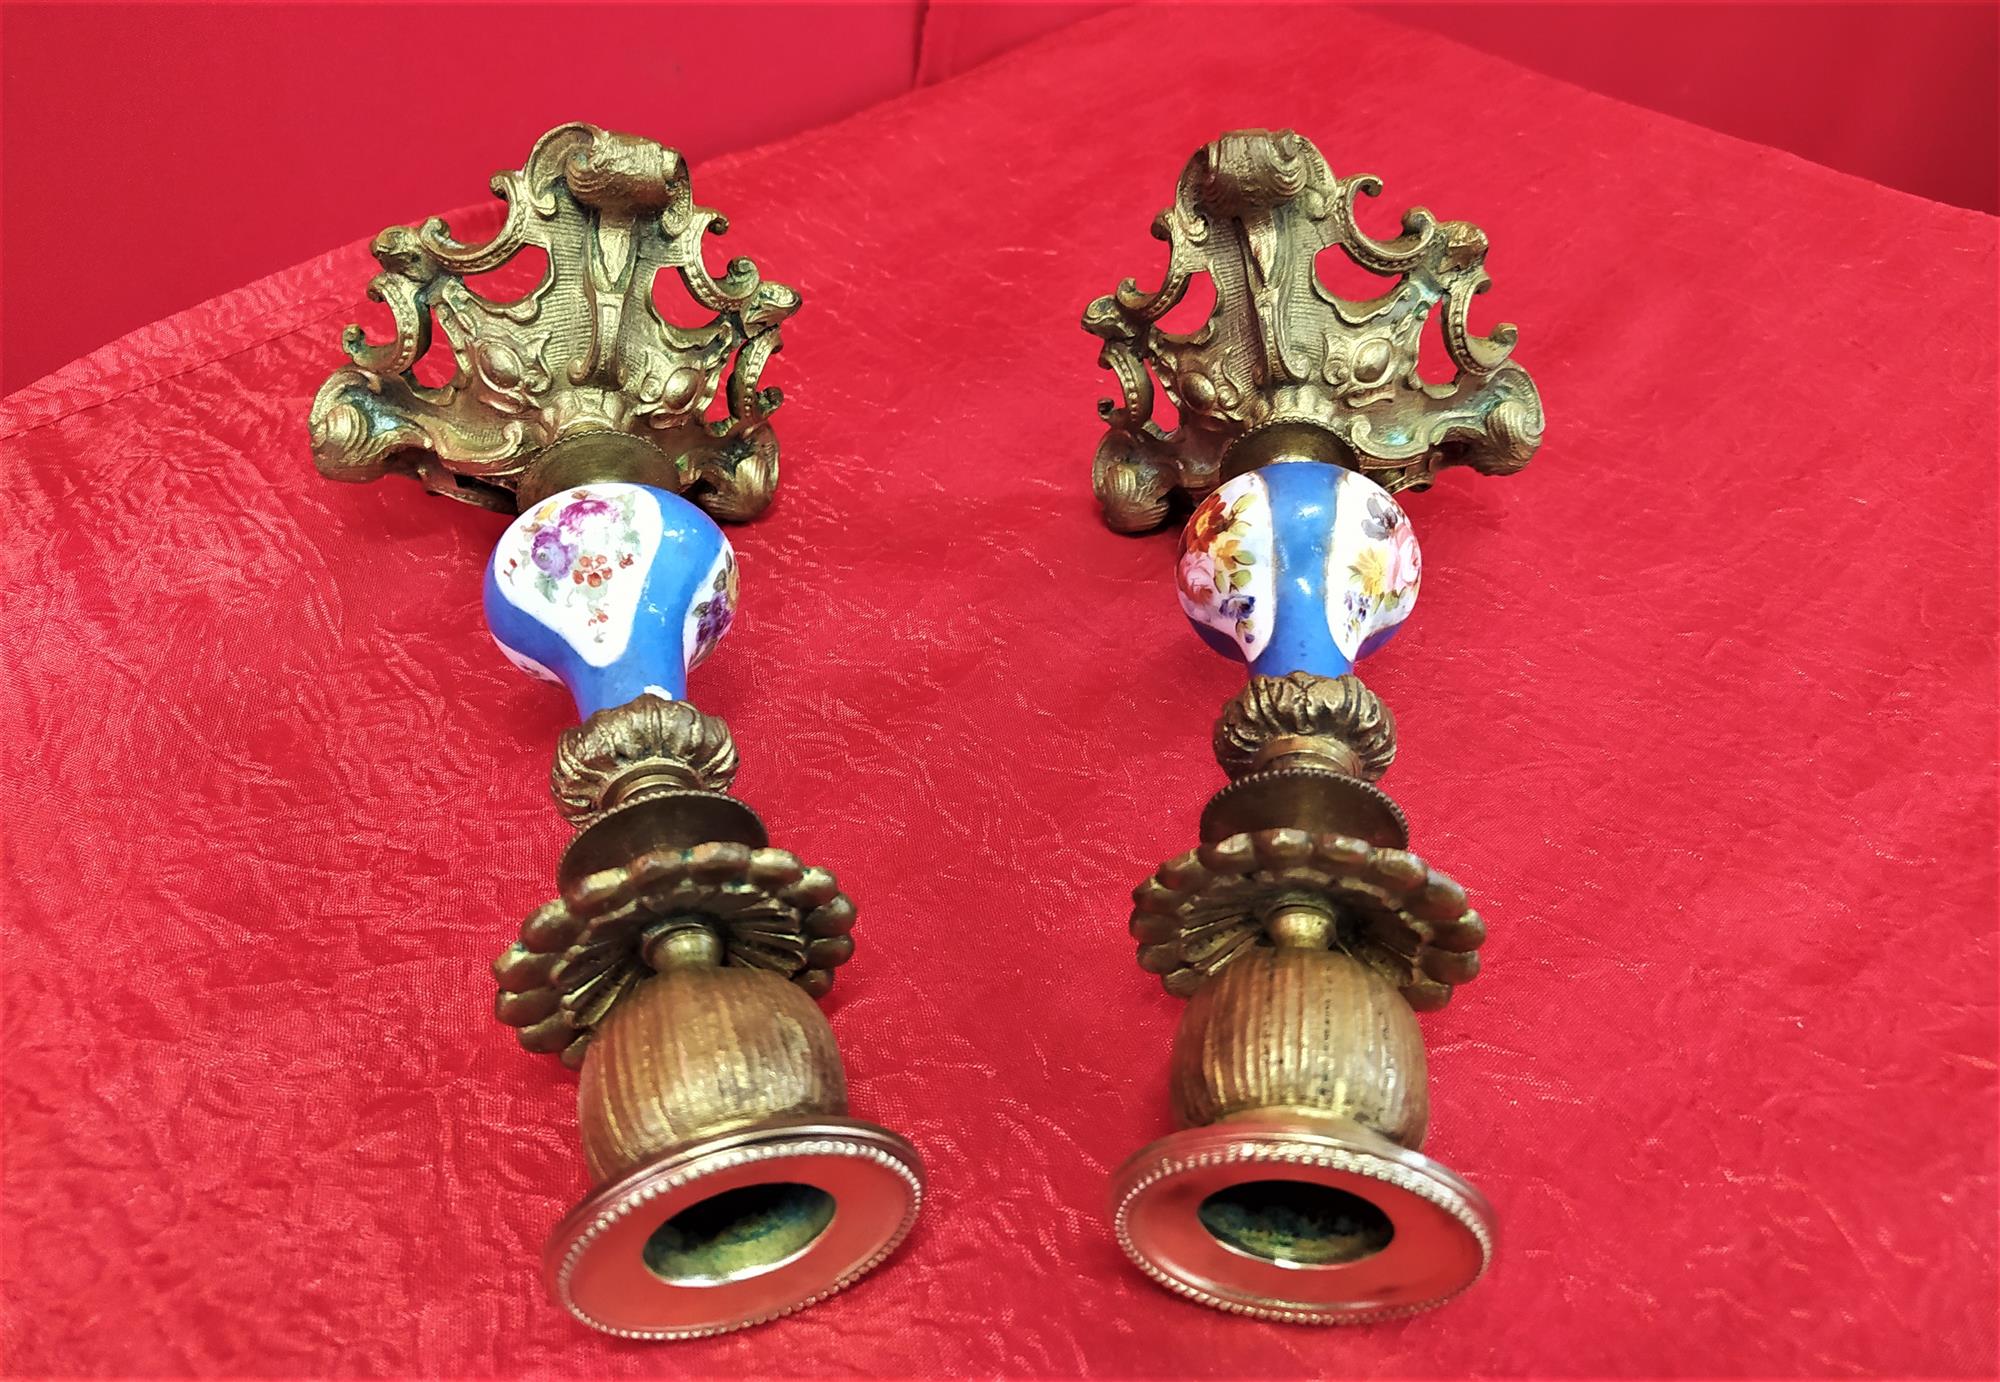 Pair of small bronze candlesticks